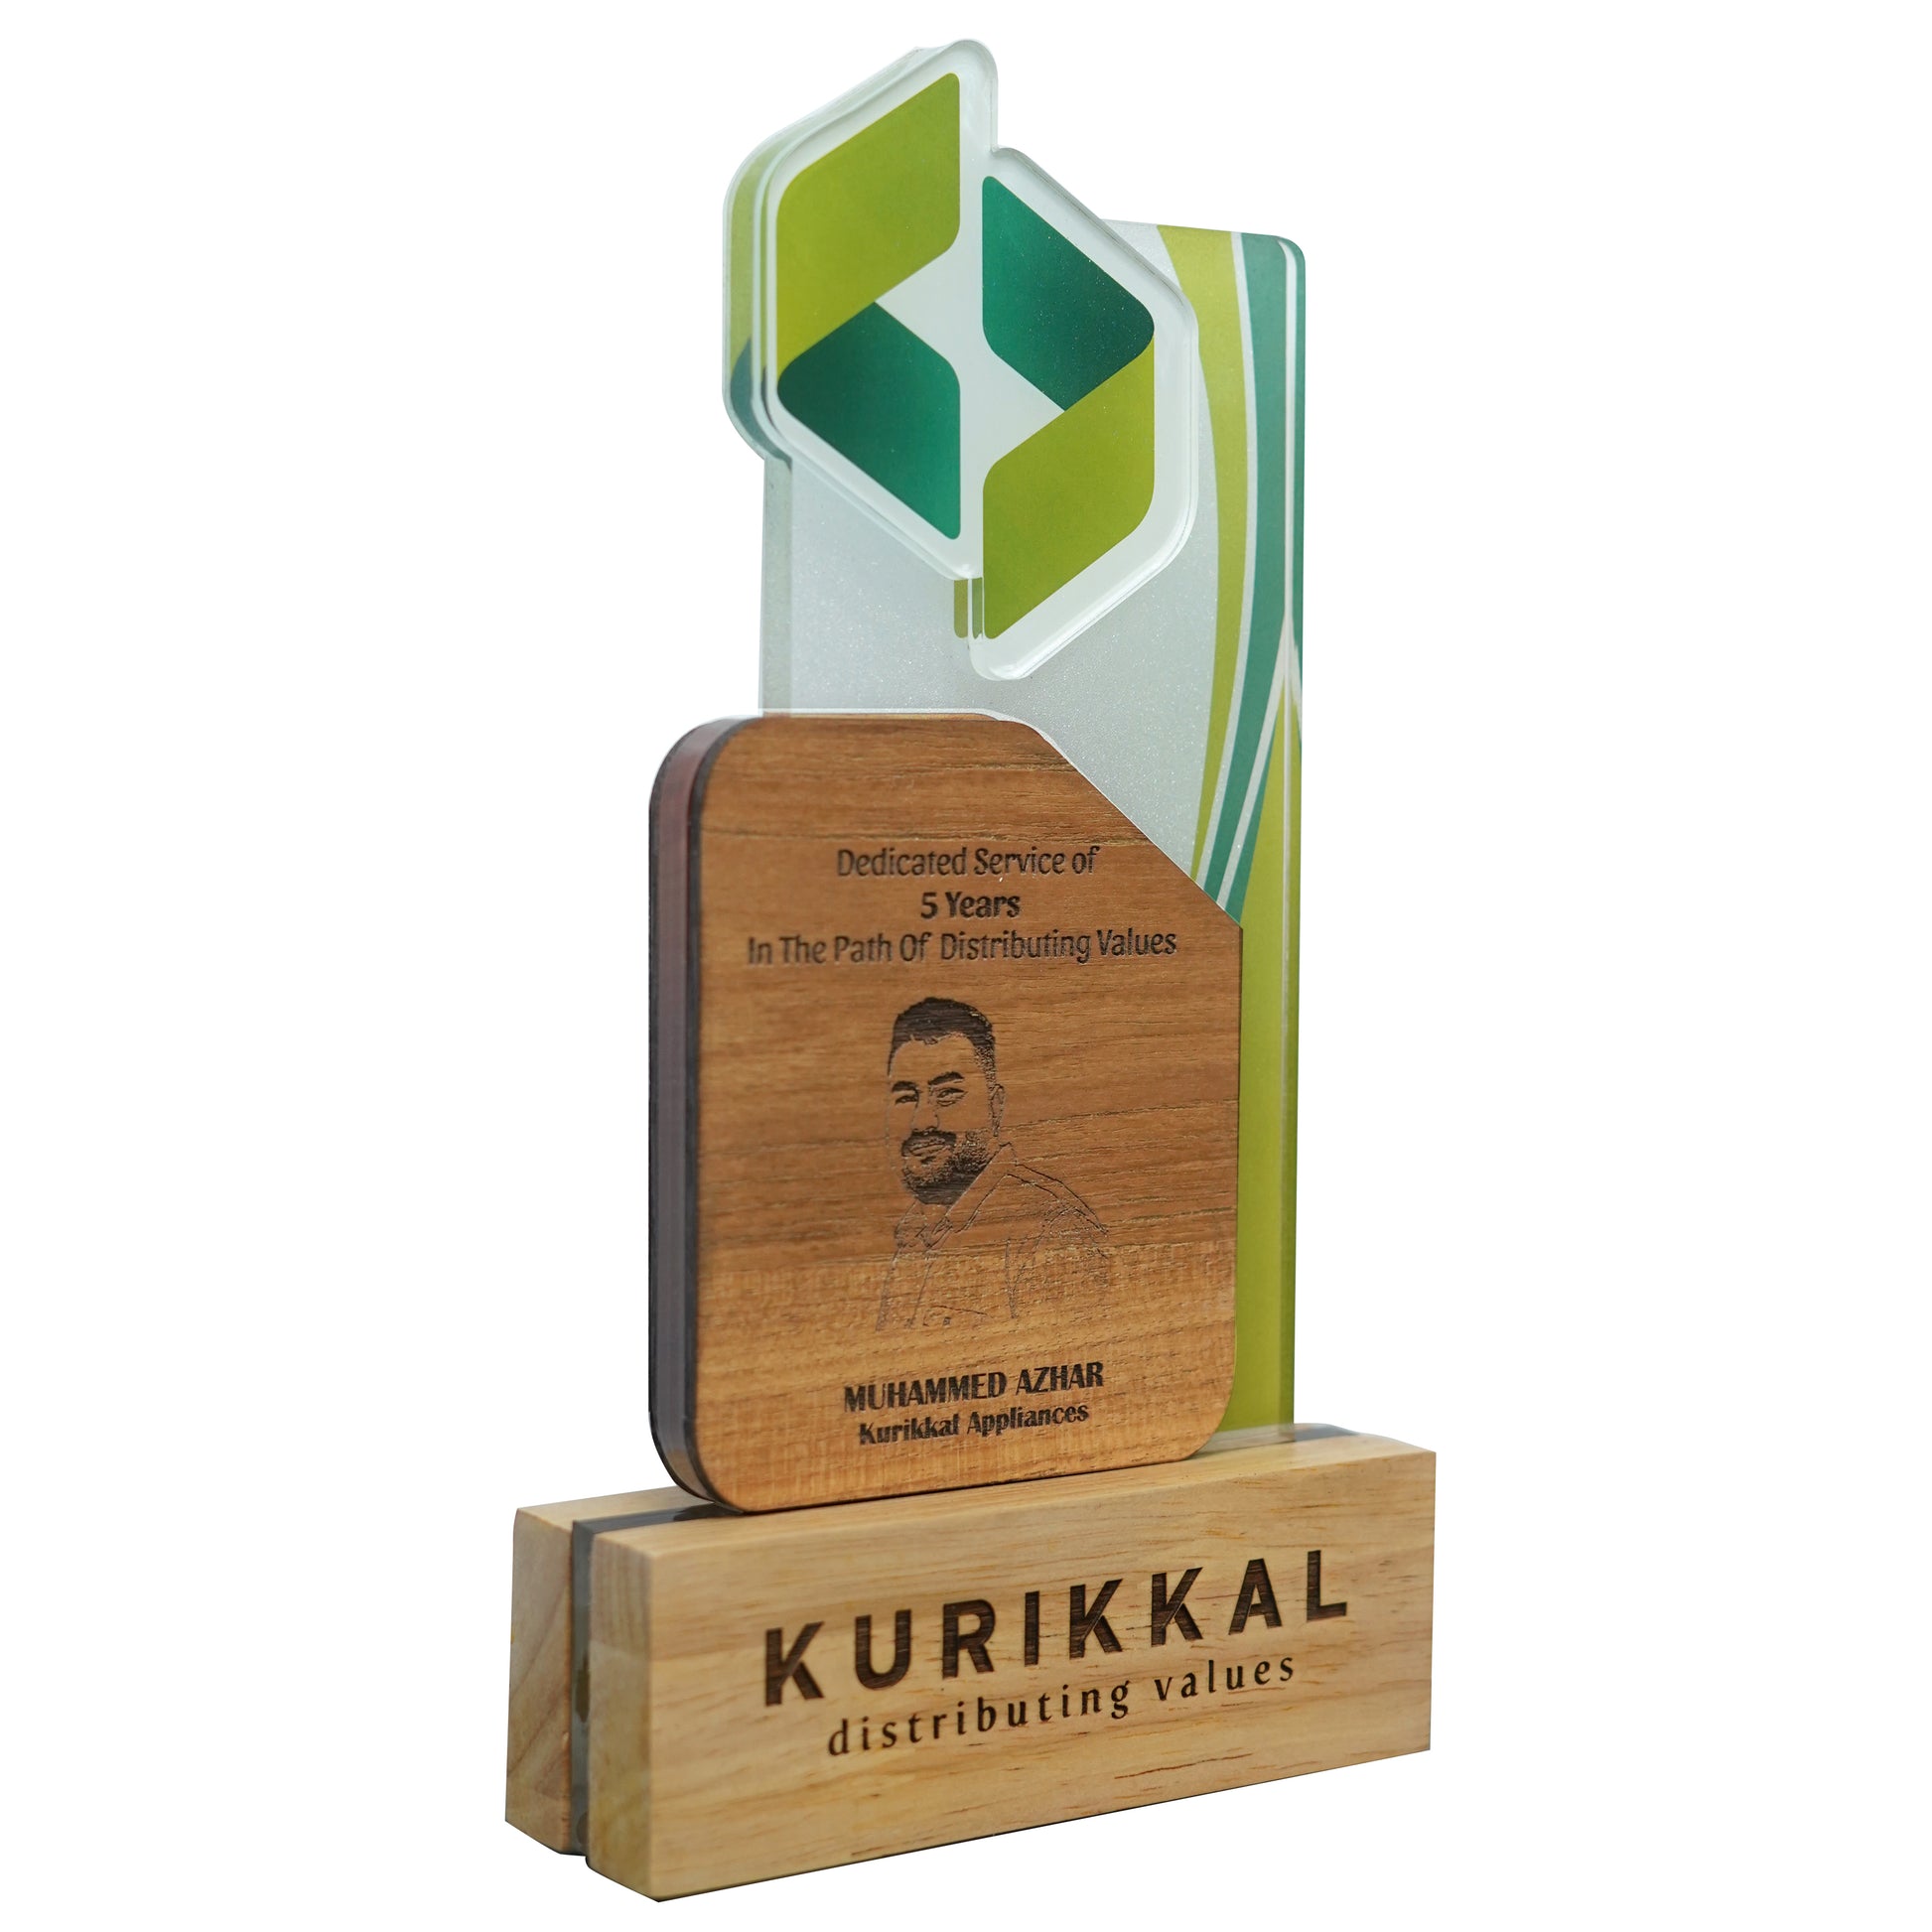 Customized Wooden Memento Corporate Award